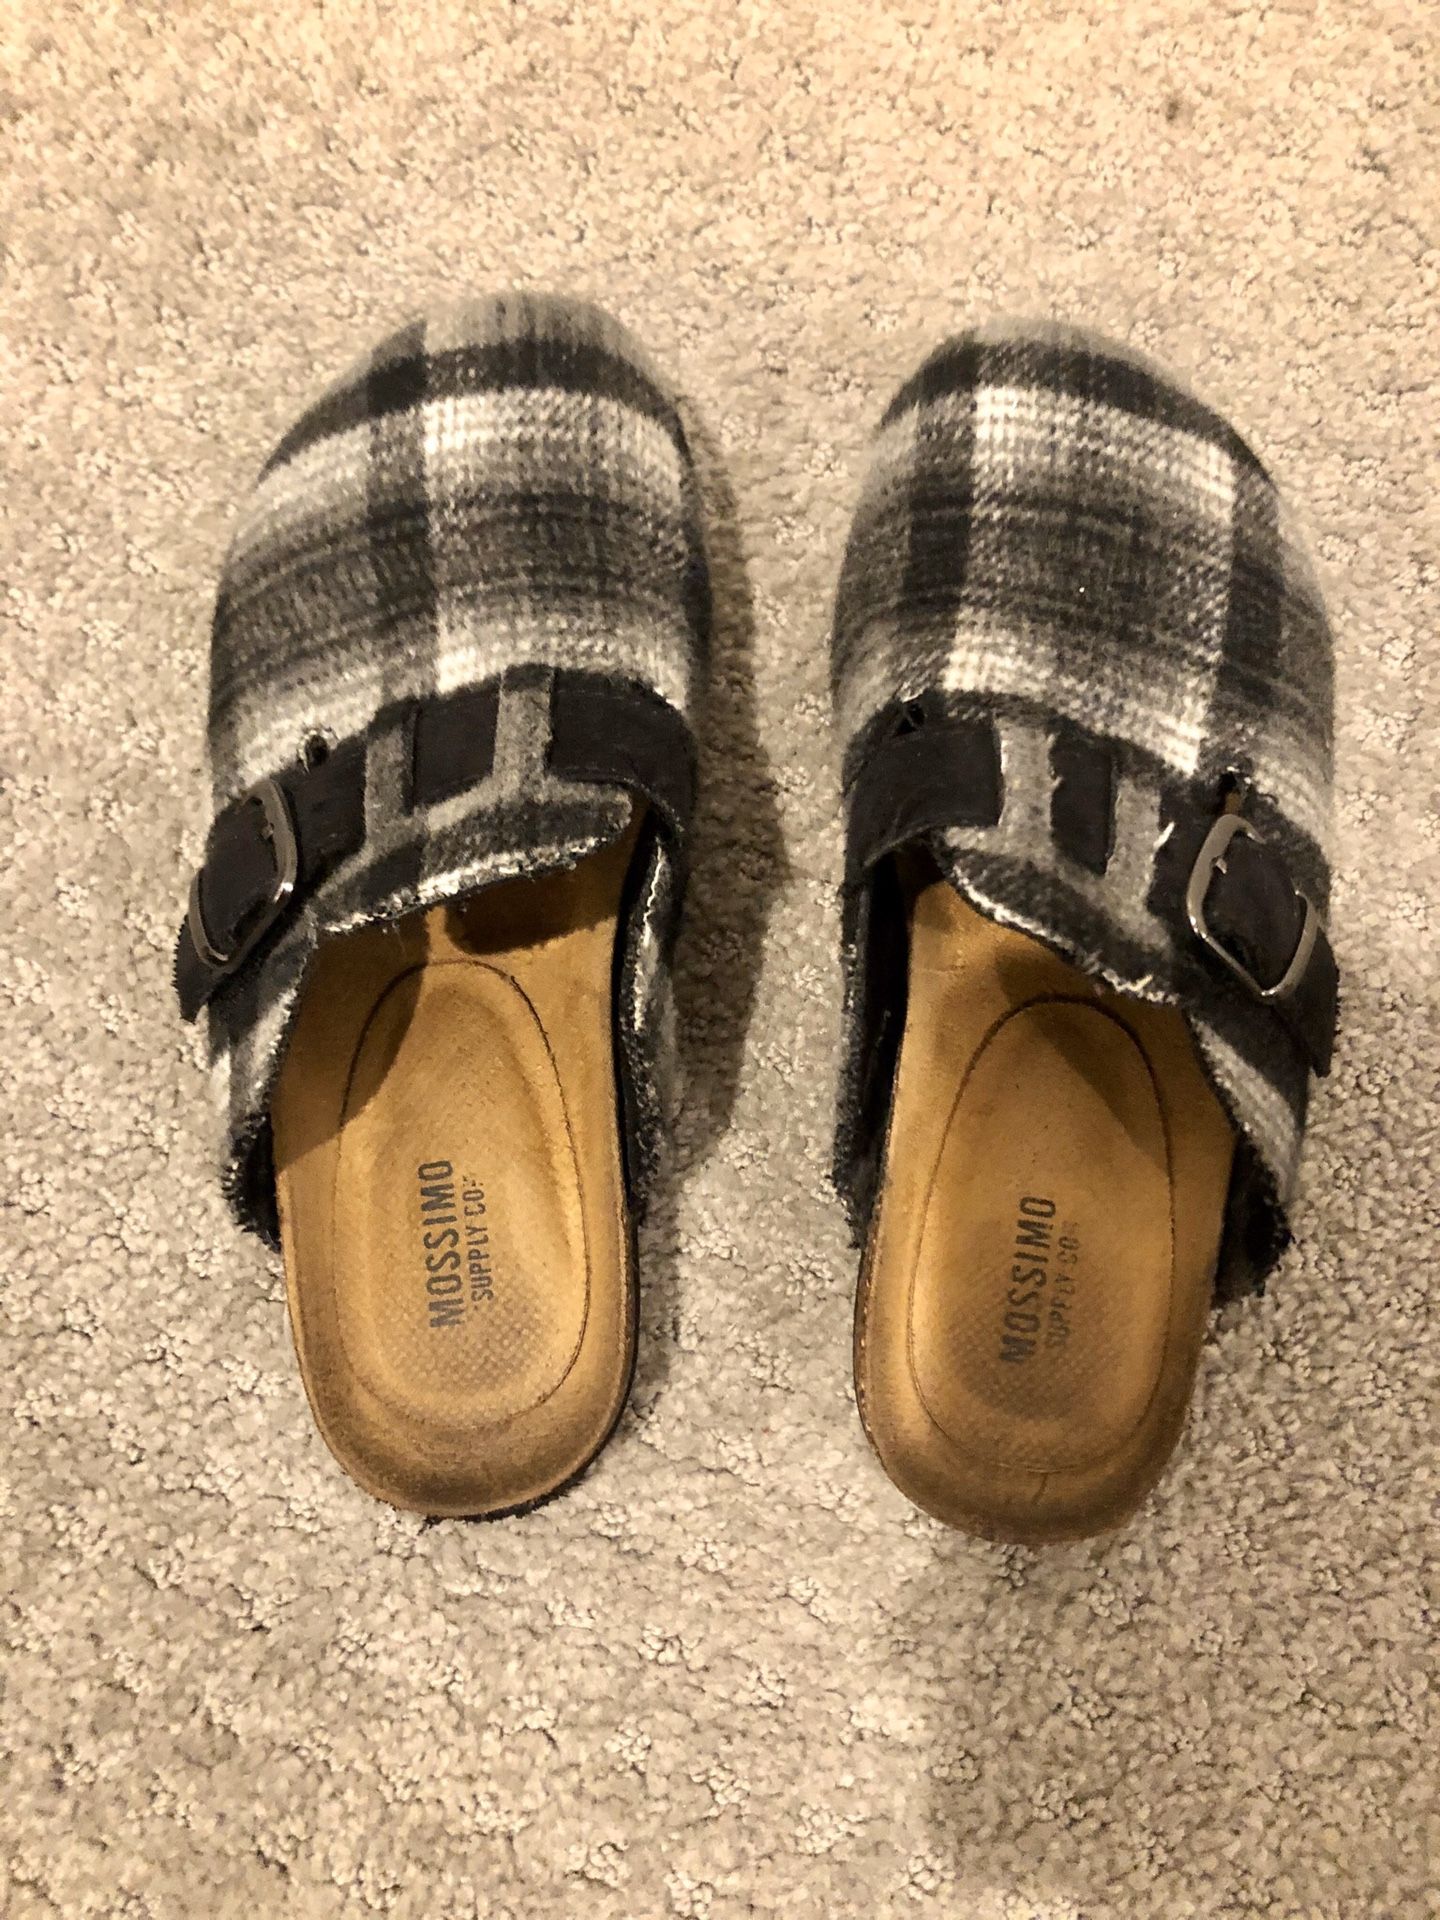 Compared to Birkenstock BOSTON clog Shoes white black size 6